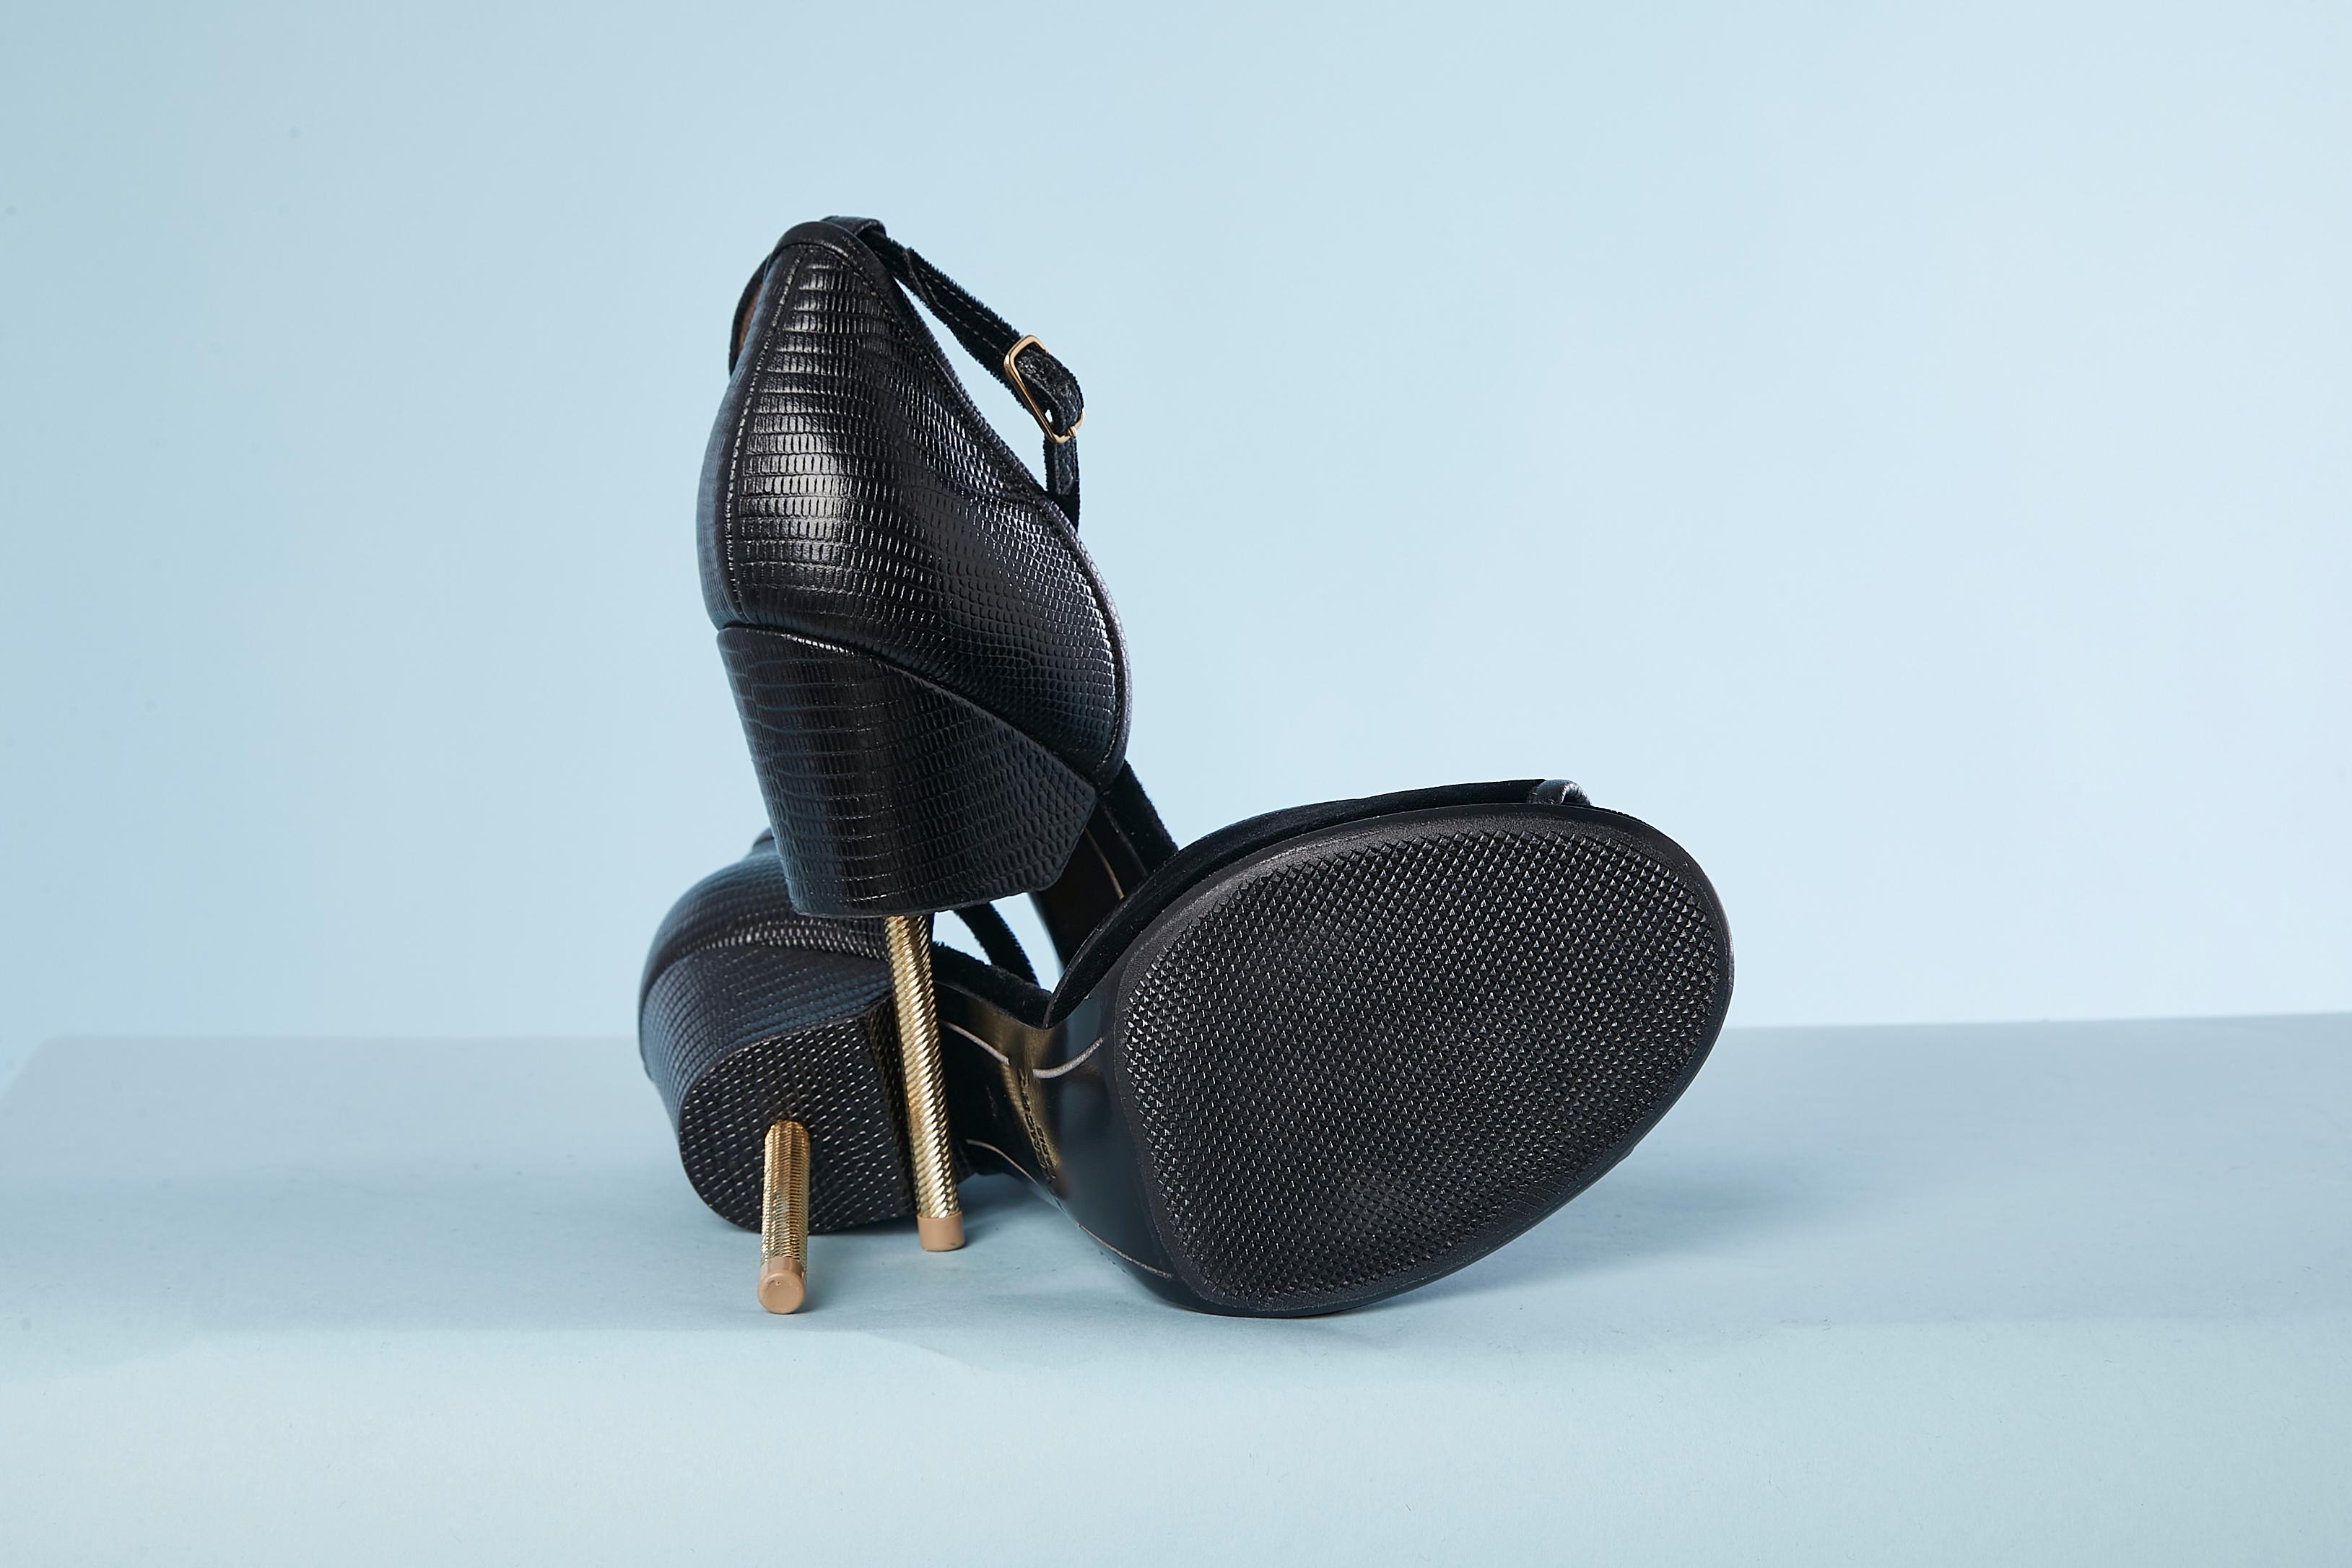 Black  leather and velvet high heel sandal with metallic screw heel.
Height of the heel= 11,5 cm
Inside platform = 1 cm
Shoe size 39 
NEW 